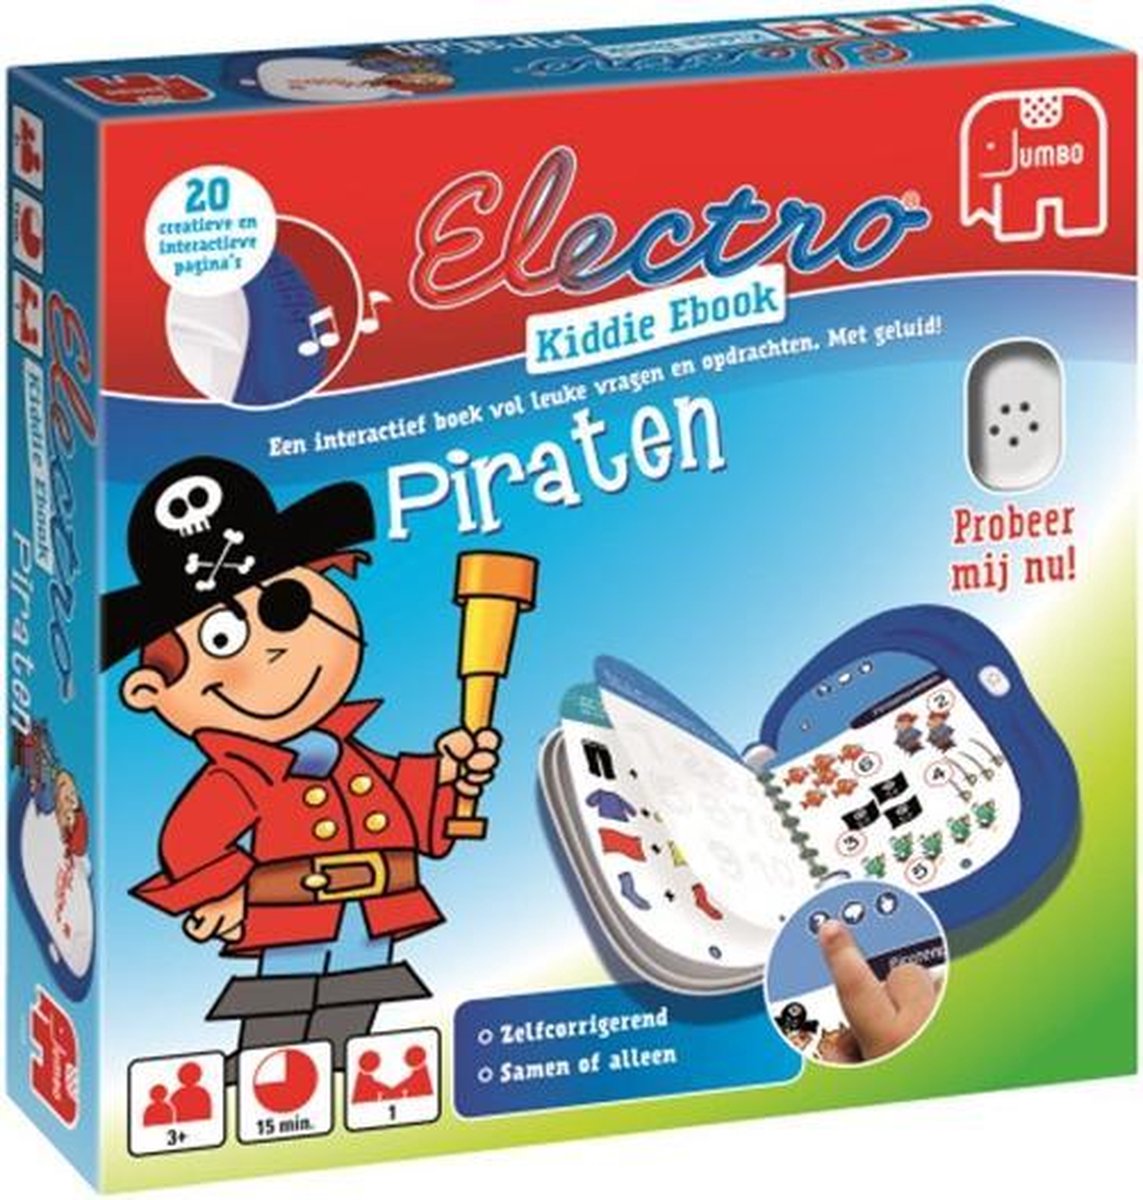 Electro Kiddie Ebook - Piraten